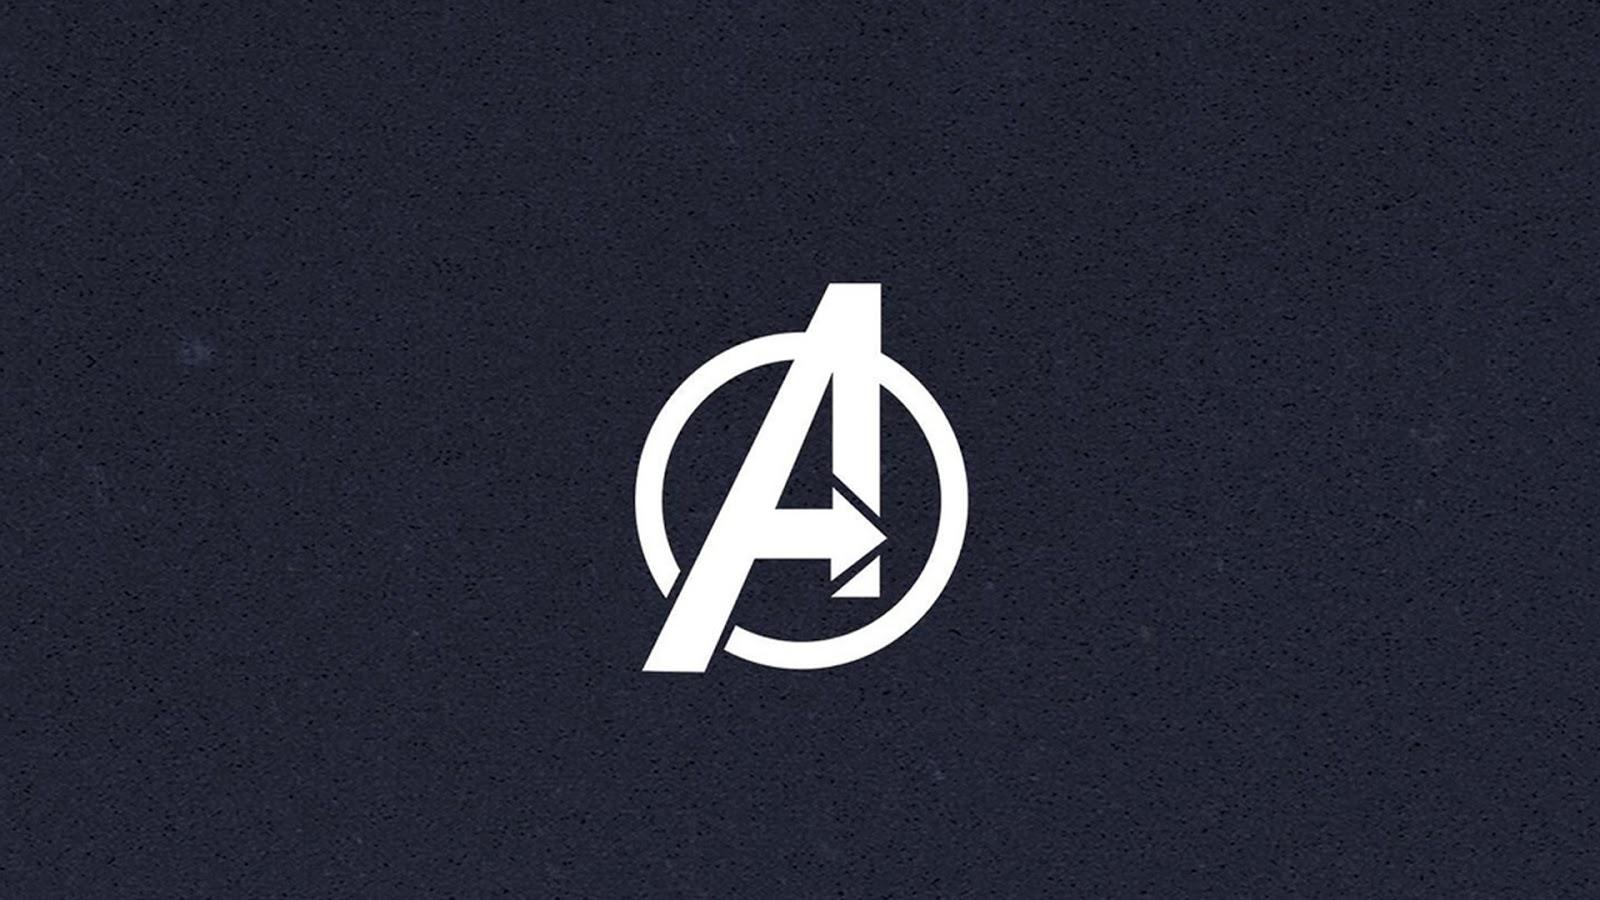 Download Avengers Endgame Wallpaper: Make Your Phone Look